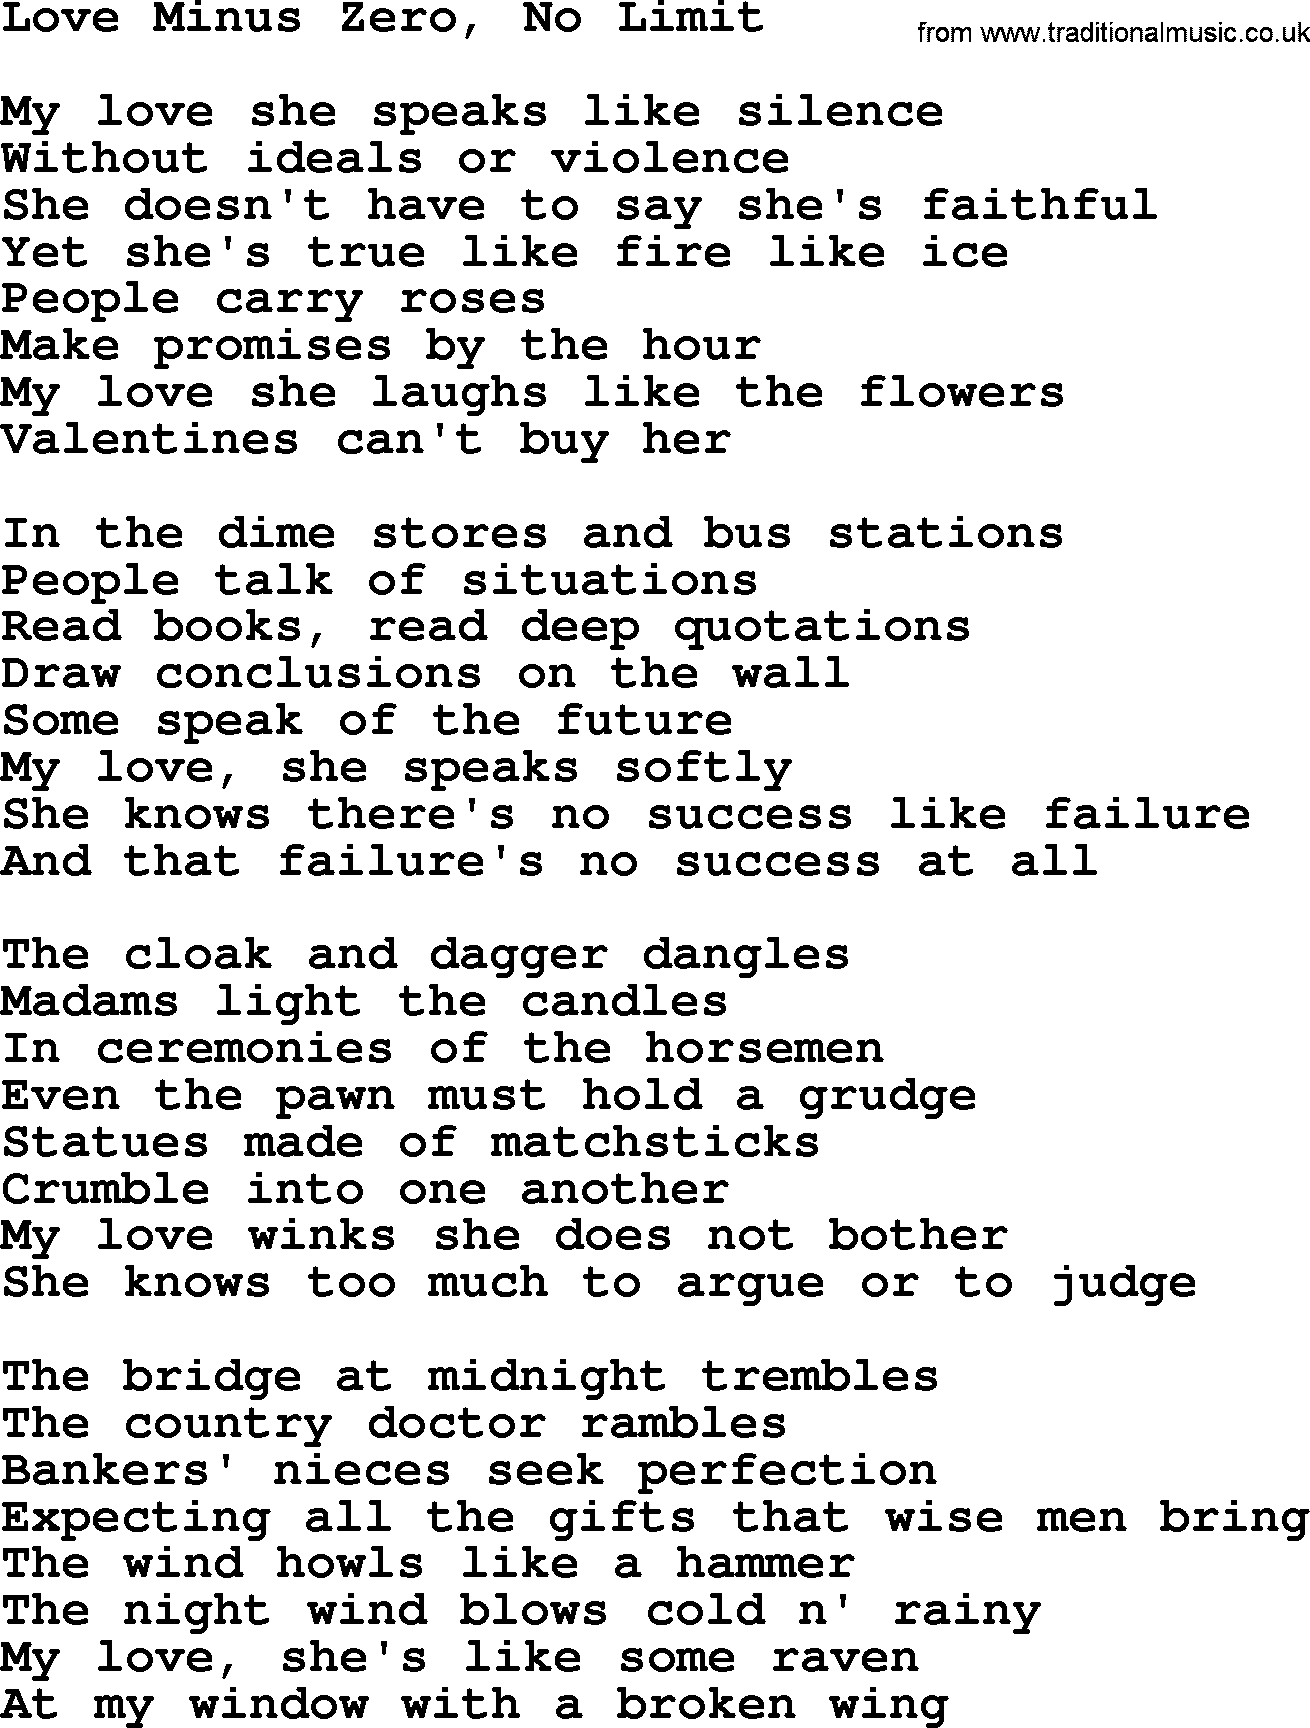 Joan Baez song Love Minus Zero, No Limit, lyrics